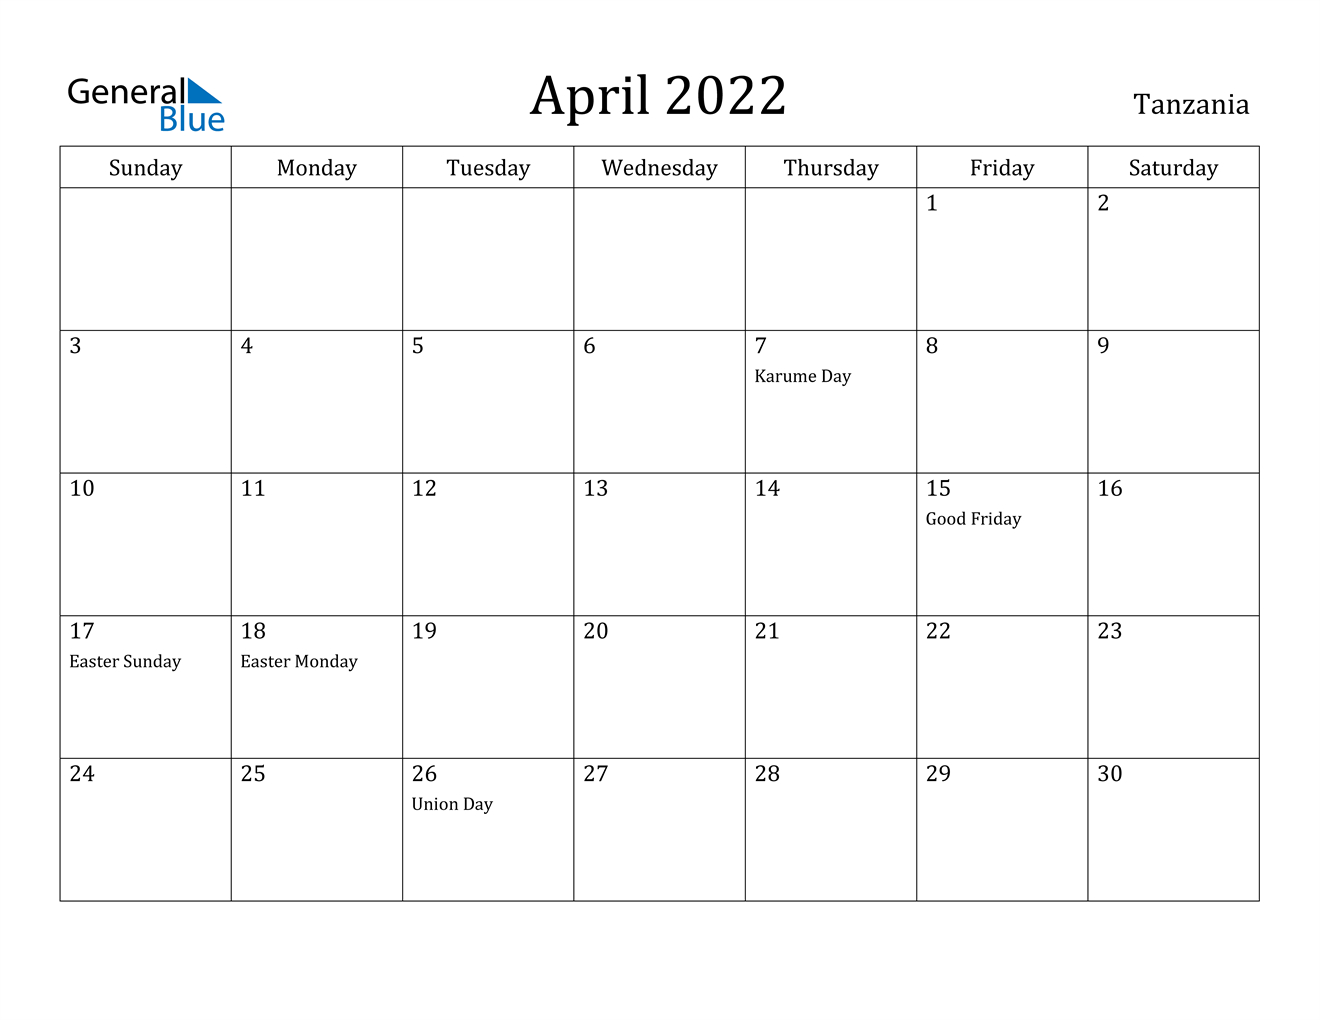 April 2022 Calendar - Tanzania  November 2022 - April 2022 Calendar